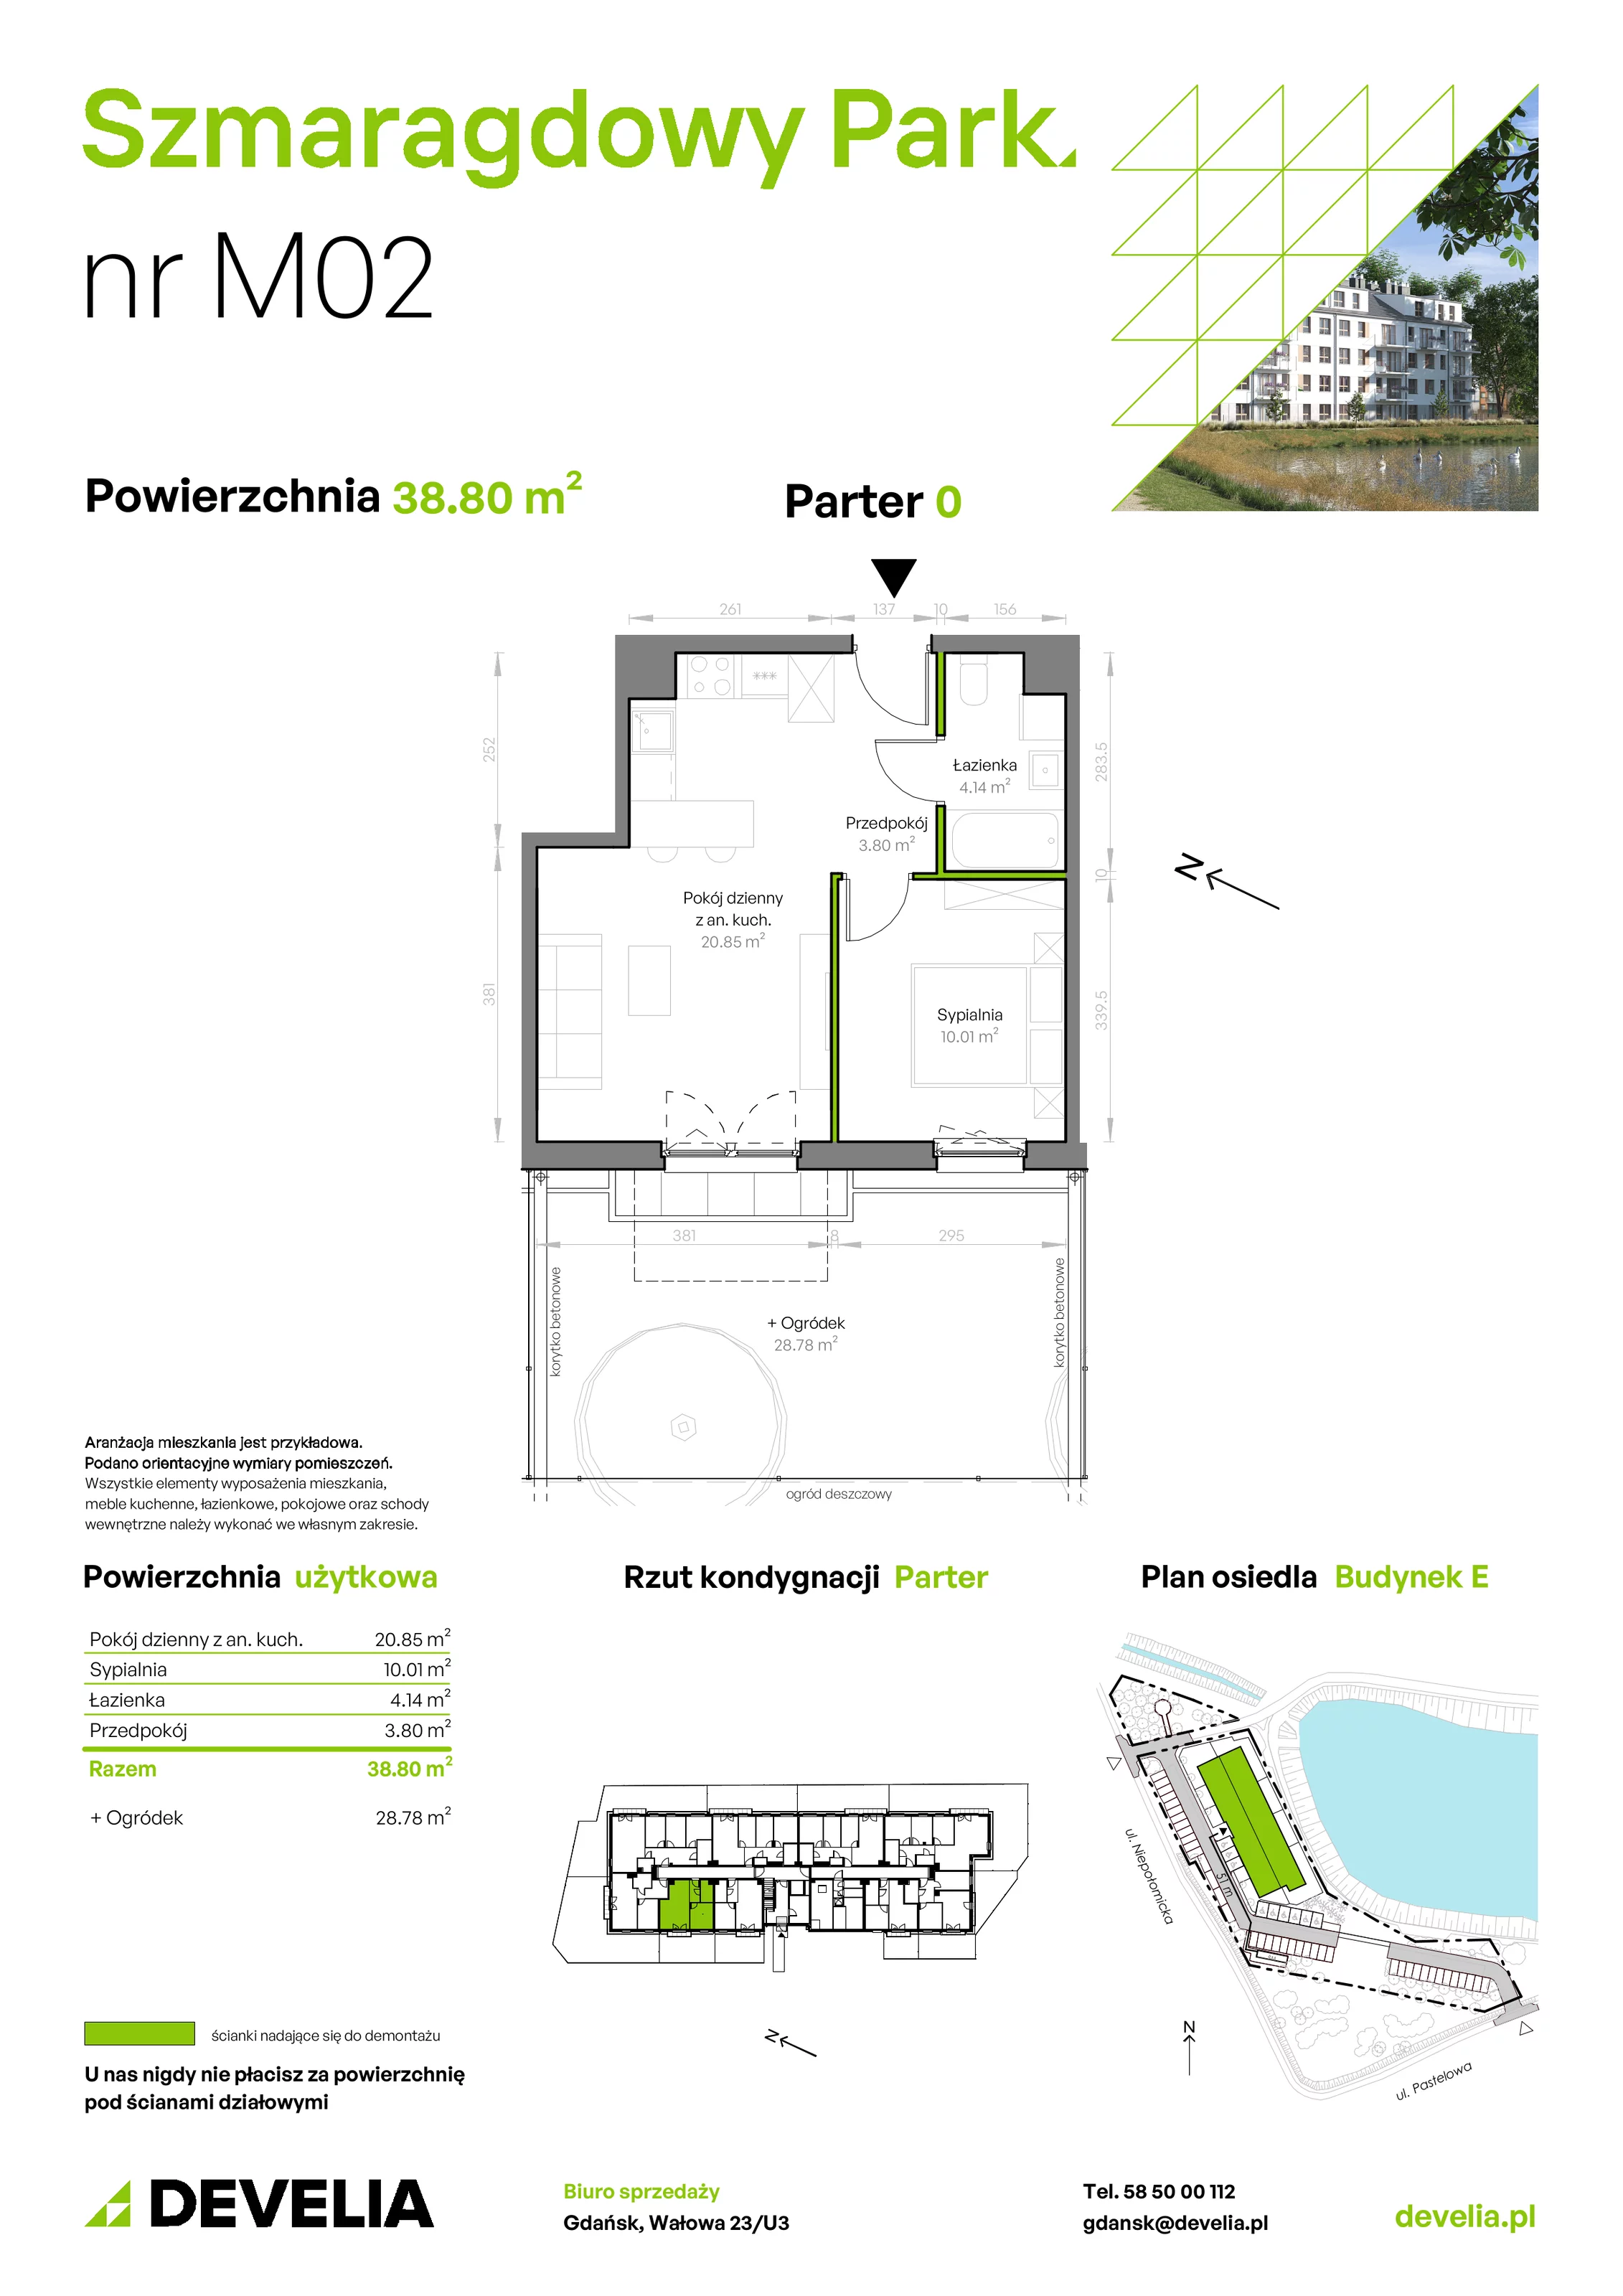 Mieszkanie 38,80 m², parter, oferta nr E/002, Szmaragdowy Park, Gdańsk, Orunia Górna-Gdańsk Południe, Łostowice, ul. Topazowa 2